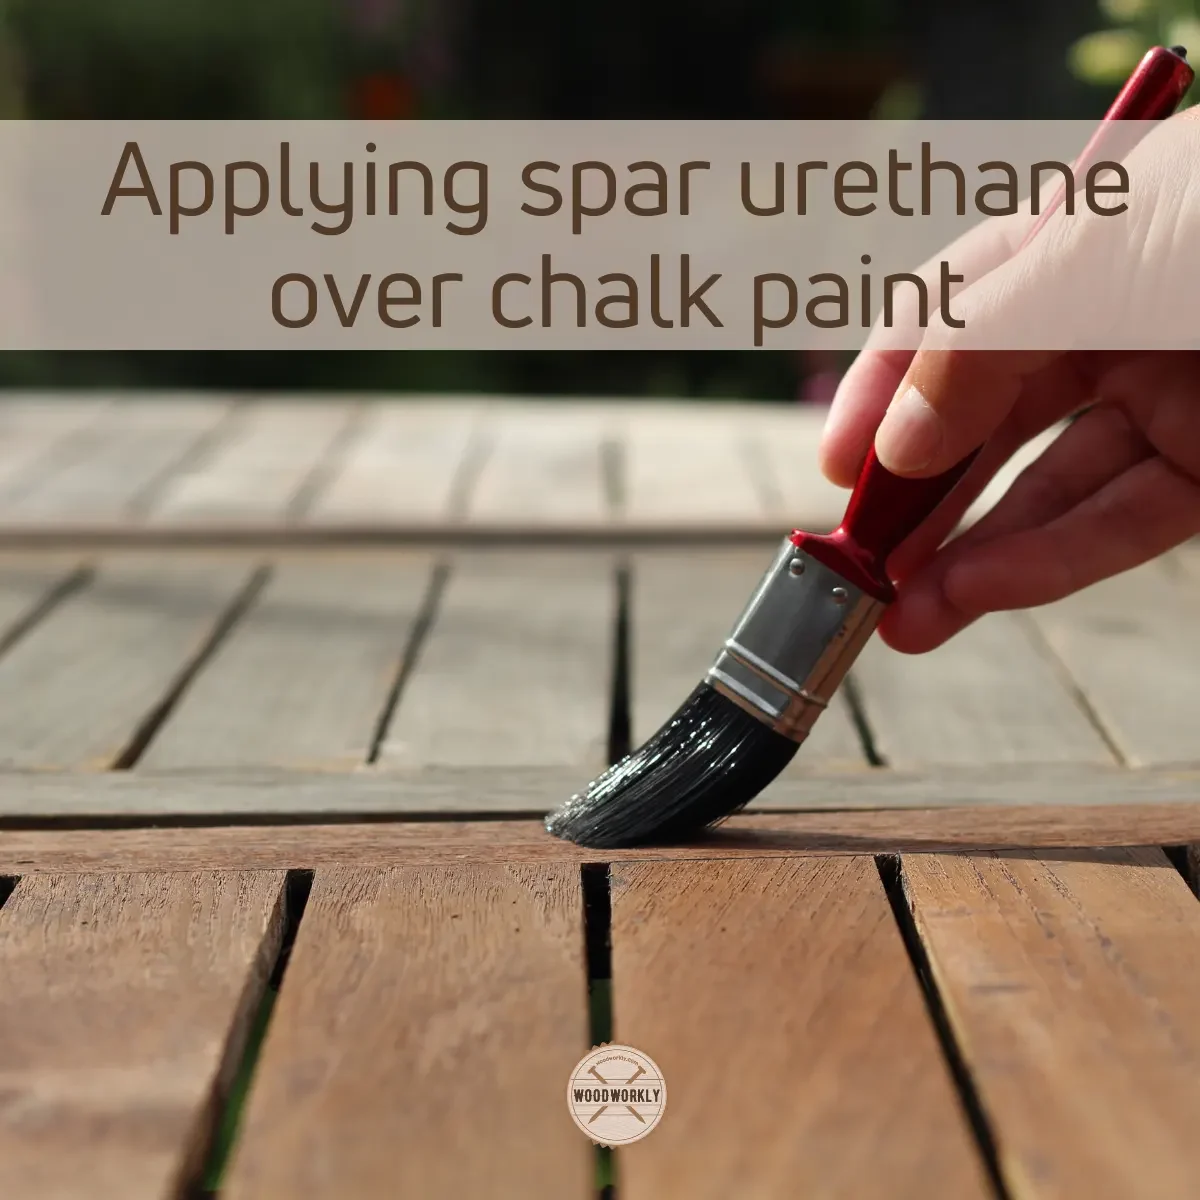 Applying spar urethane over chalk paint